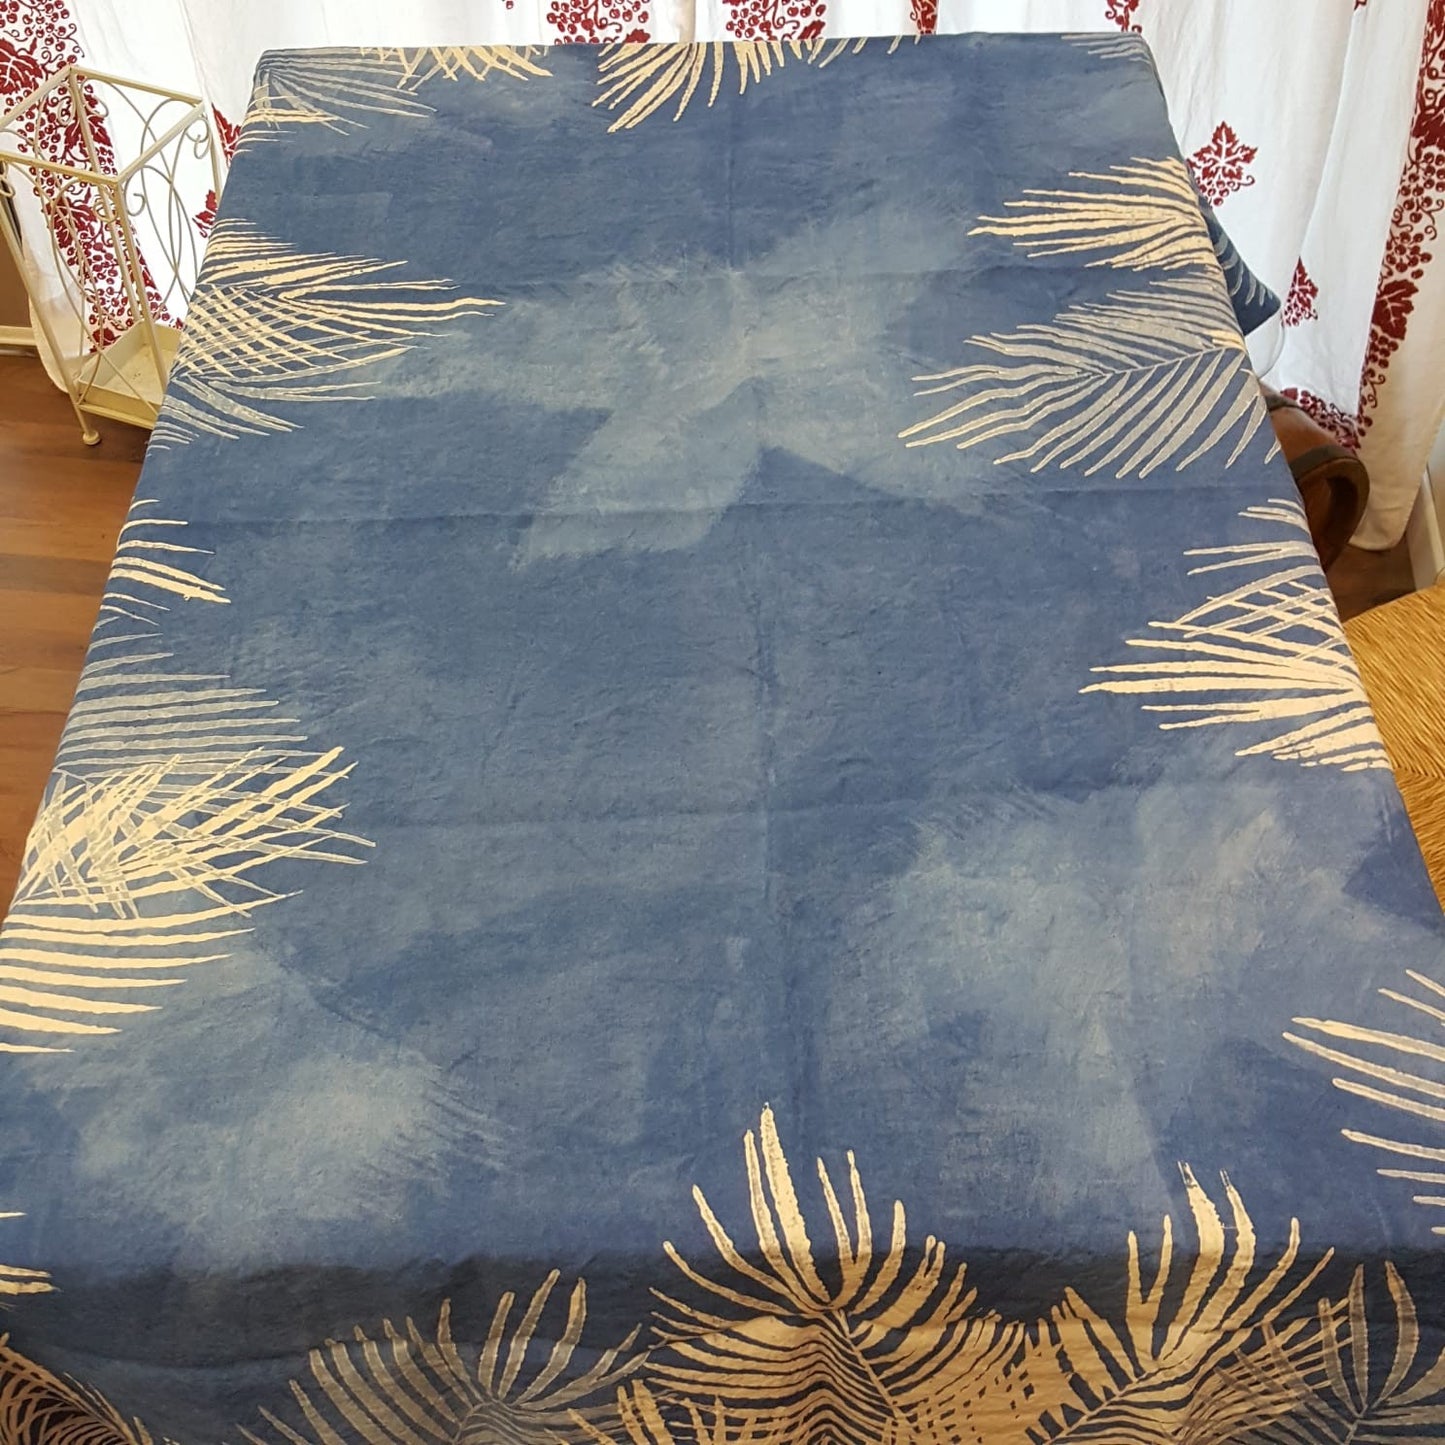 Blue Palma crumpled linen tablecloth